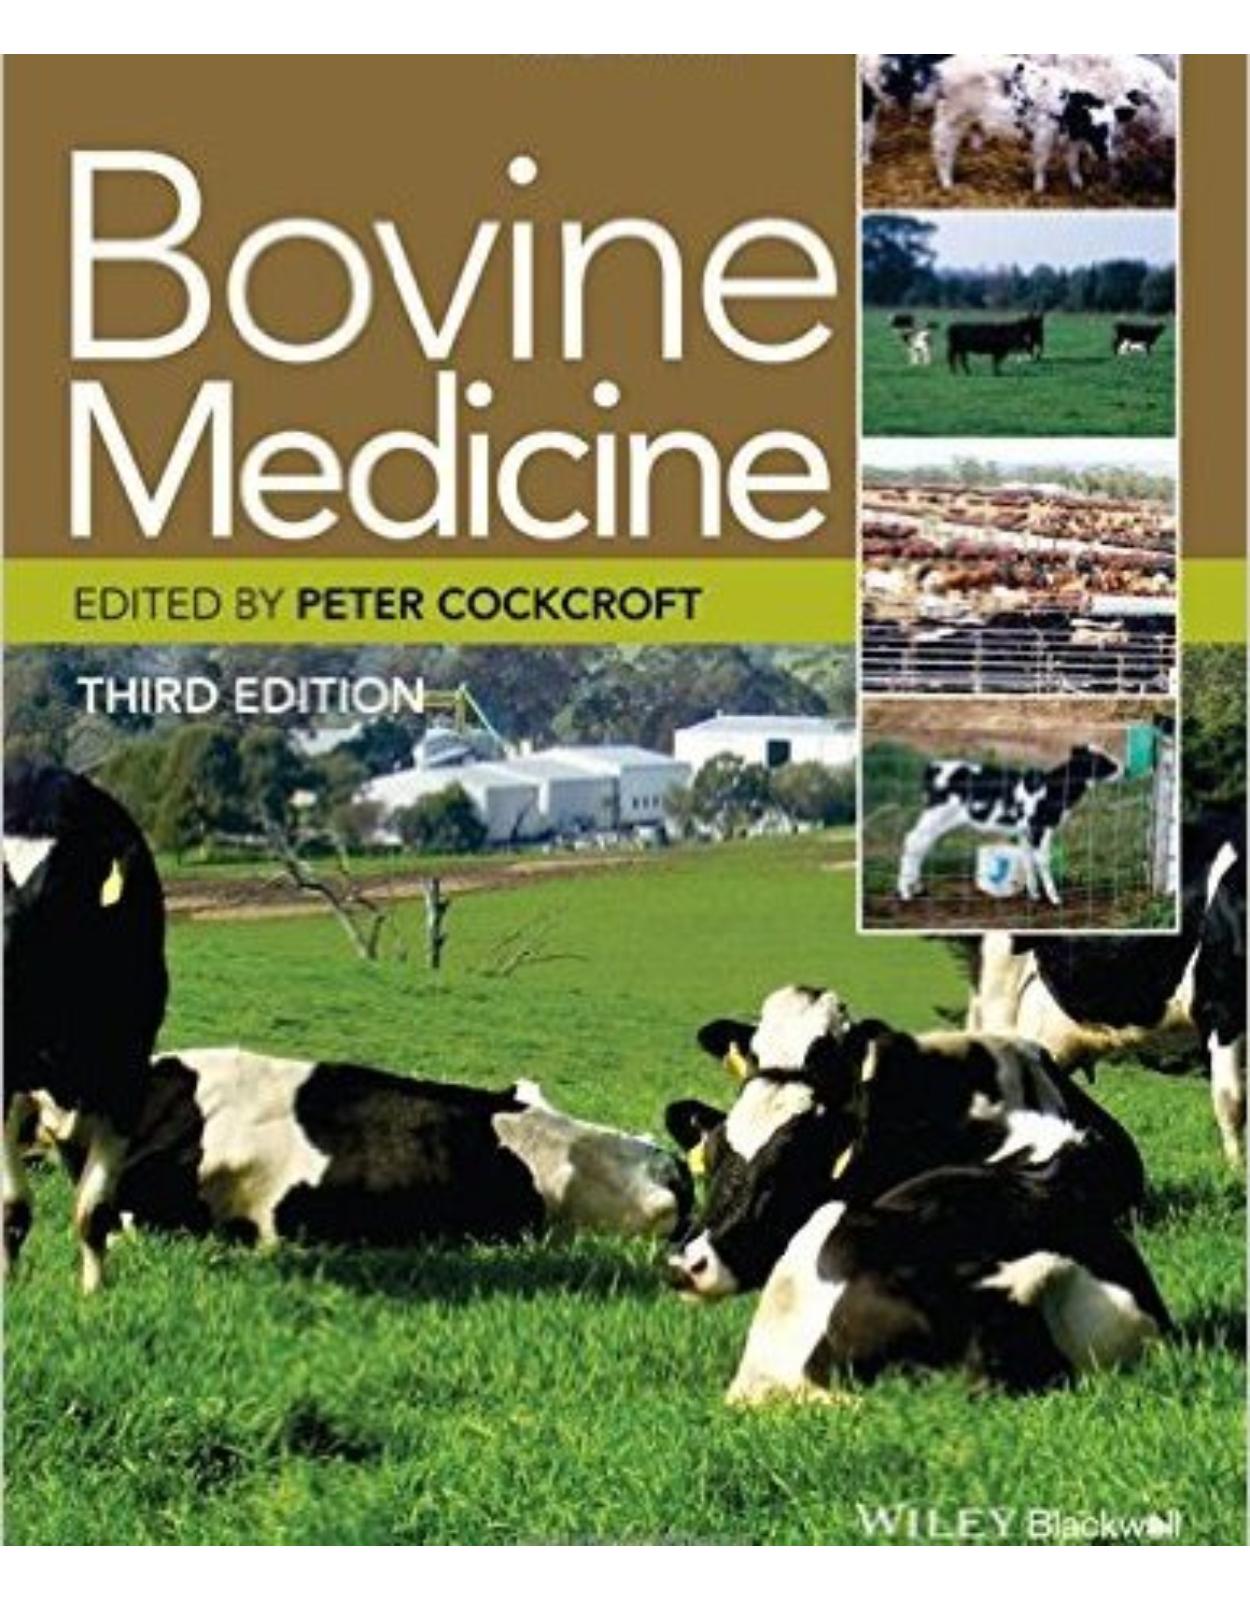 Bovine Medicine 3rd Edition